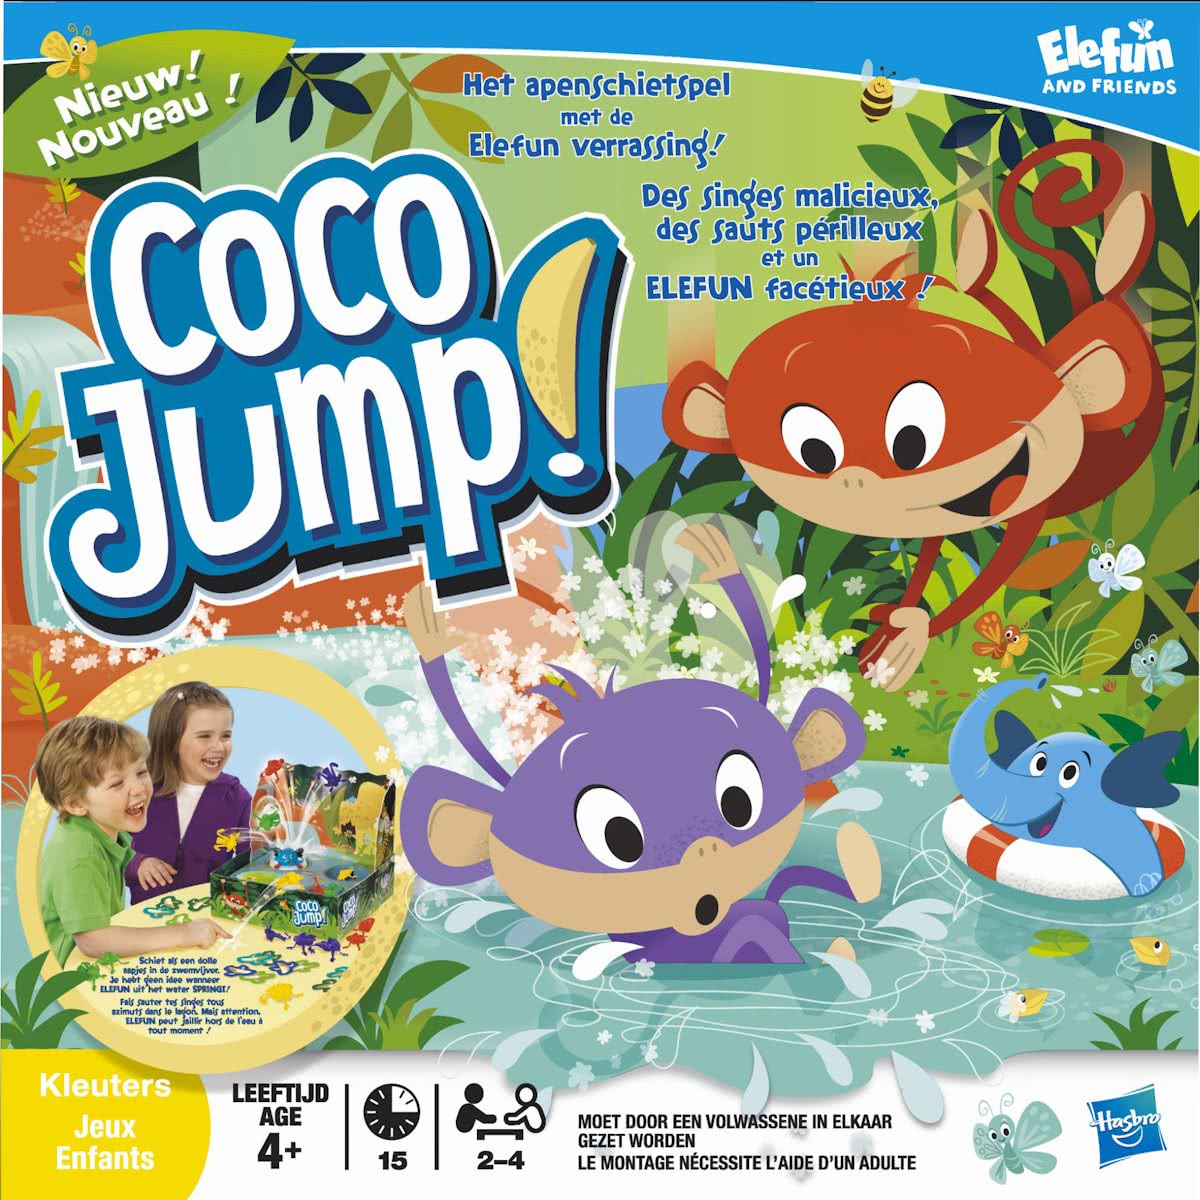 Coco Jump - Kinderspel